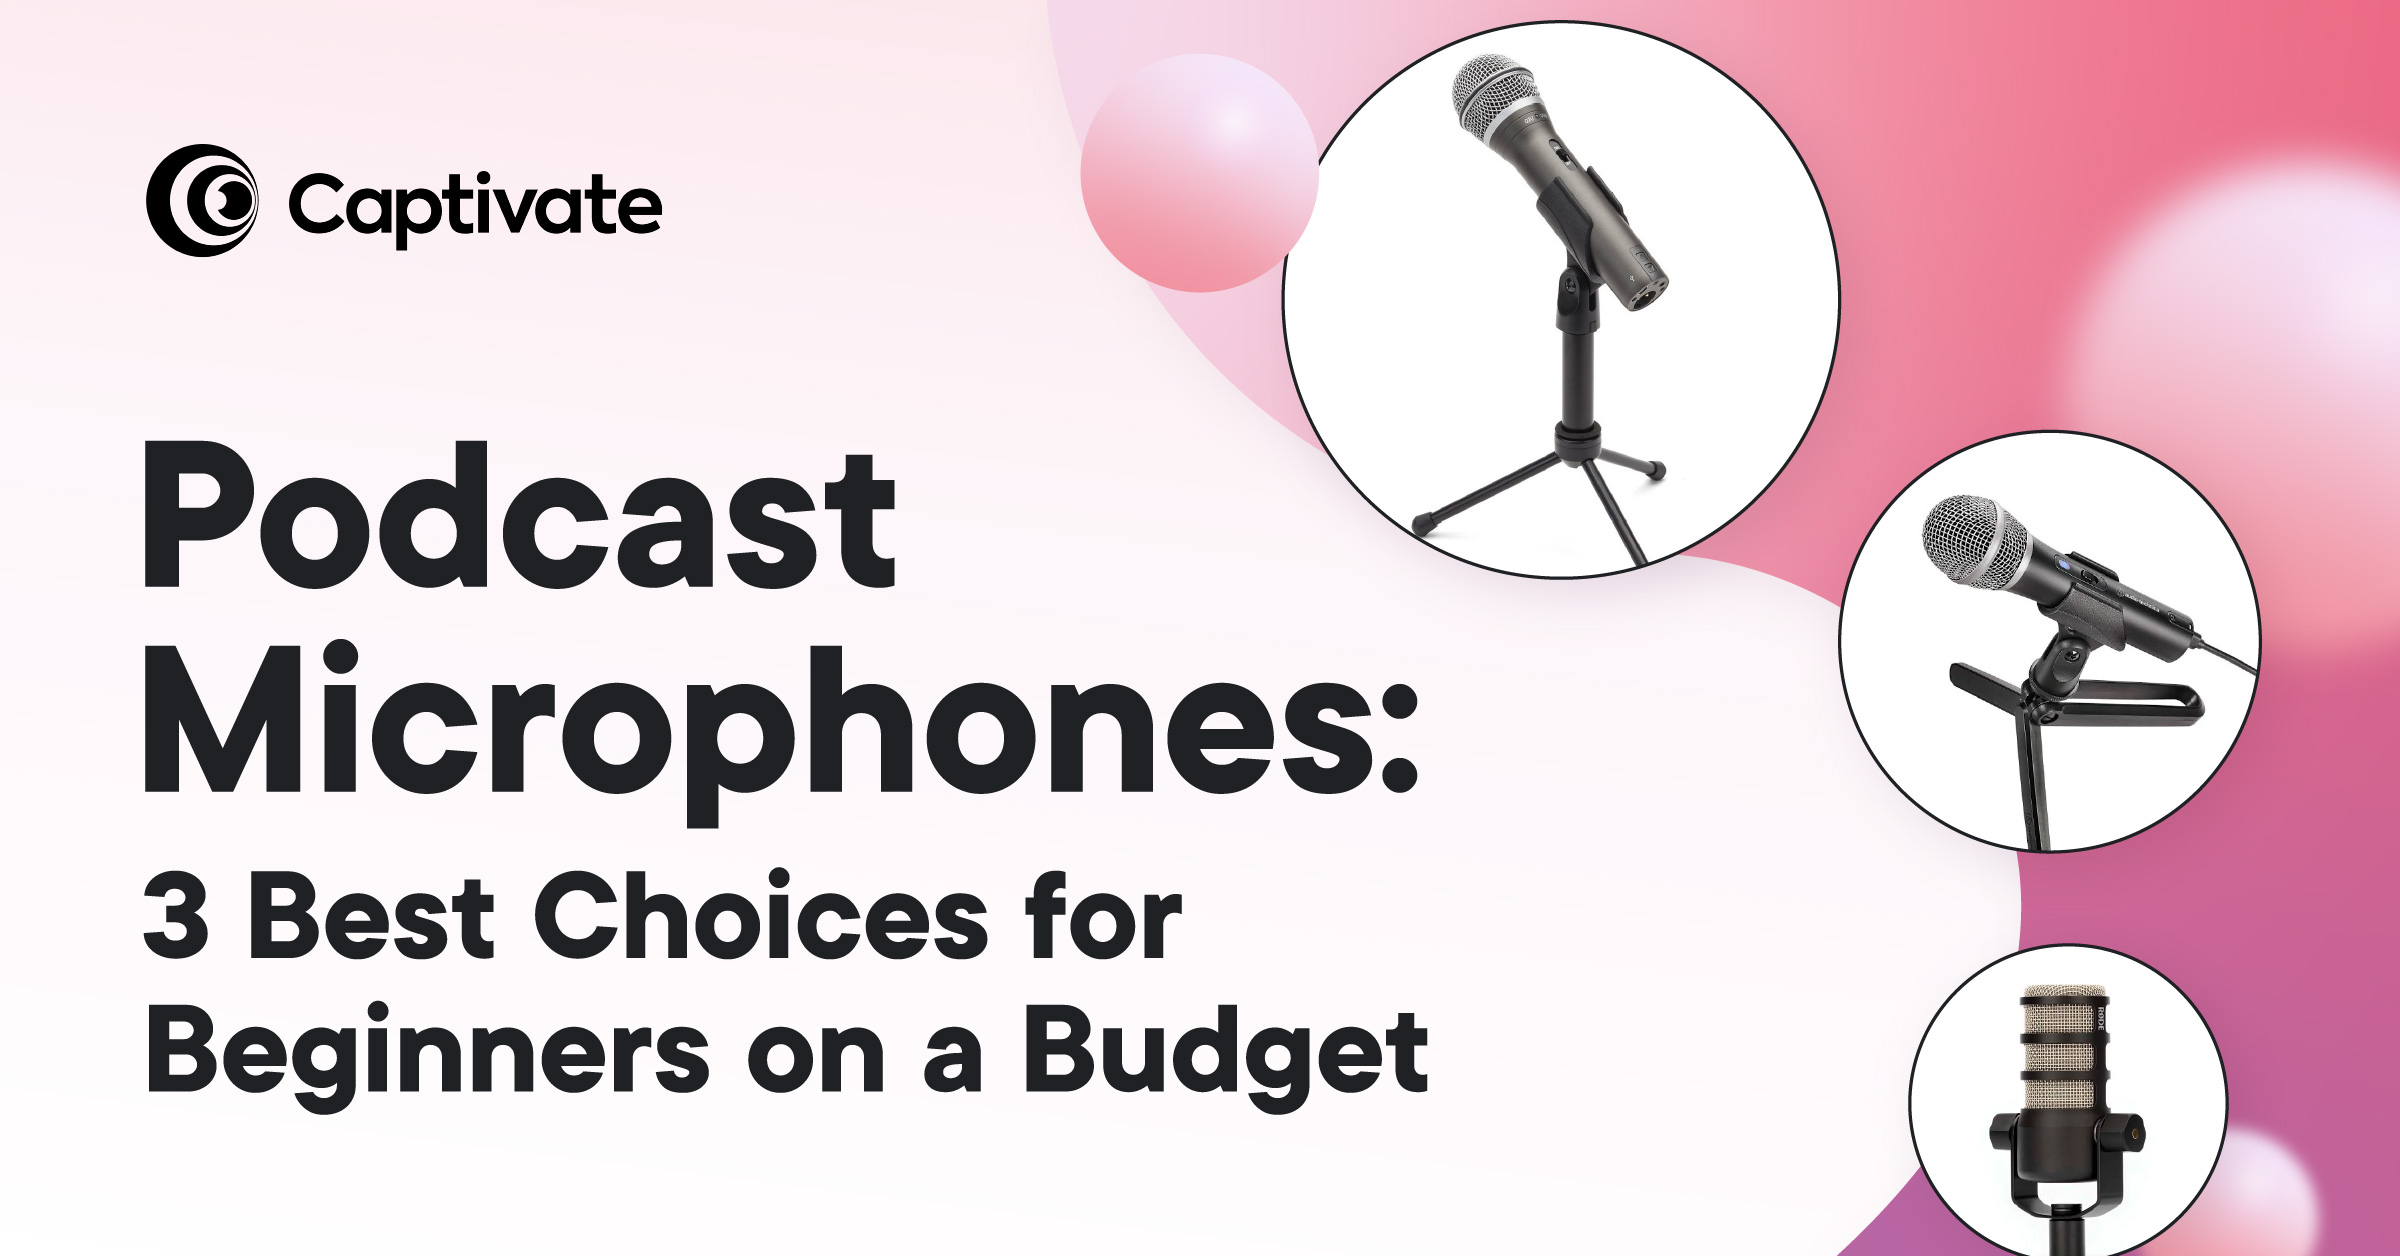 45 Cute microphones ideas  microphones, microphone, music accessories